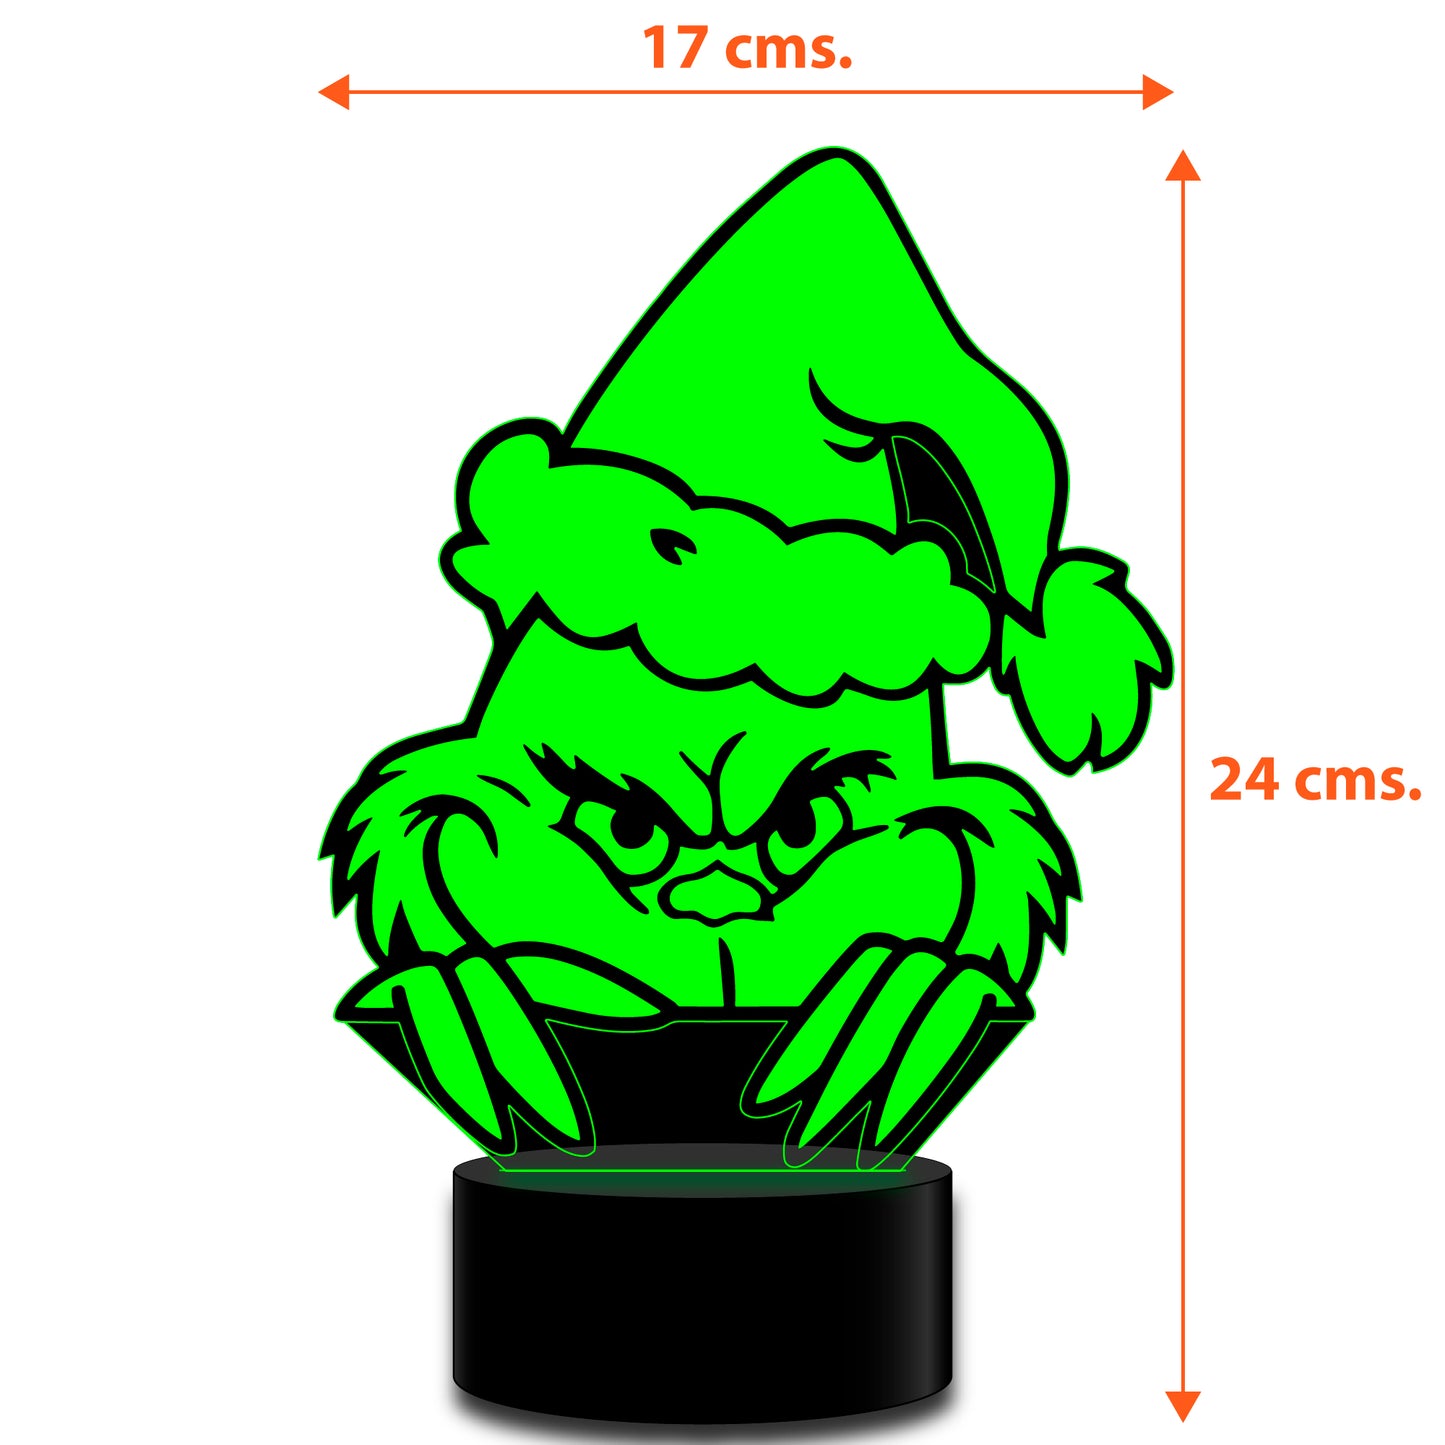 Lámpara led 3D el Rostro del Grinch navidad